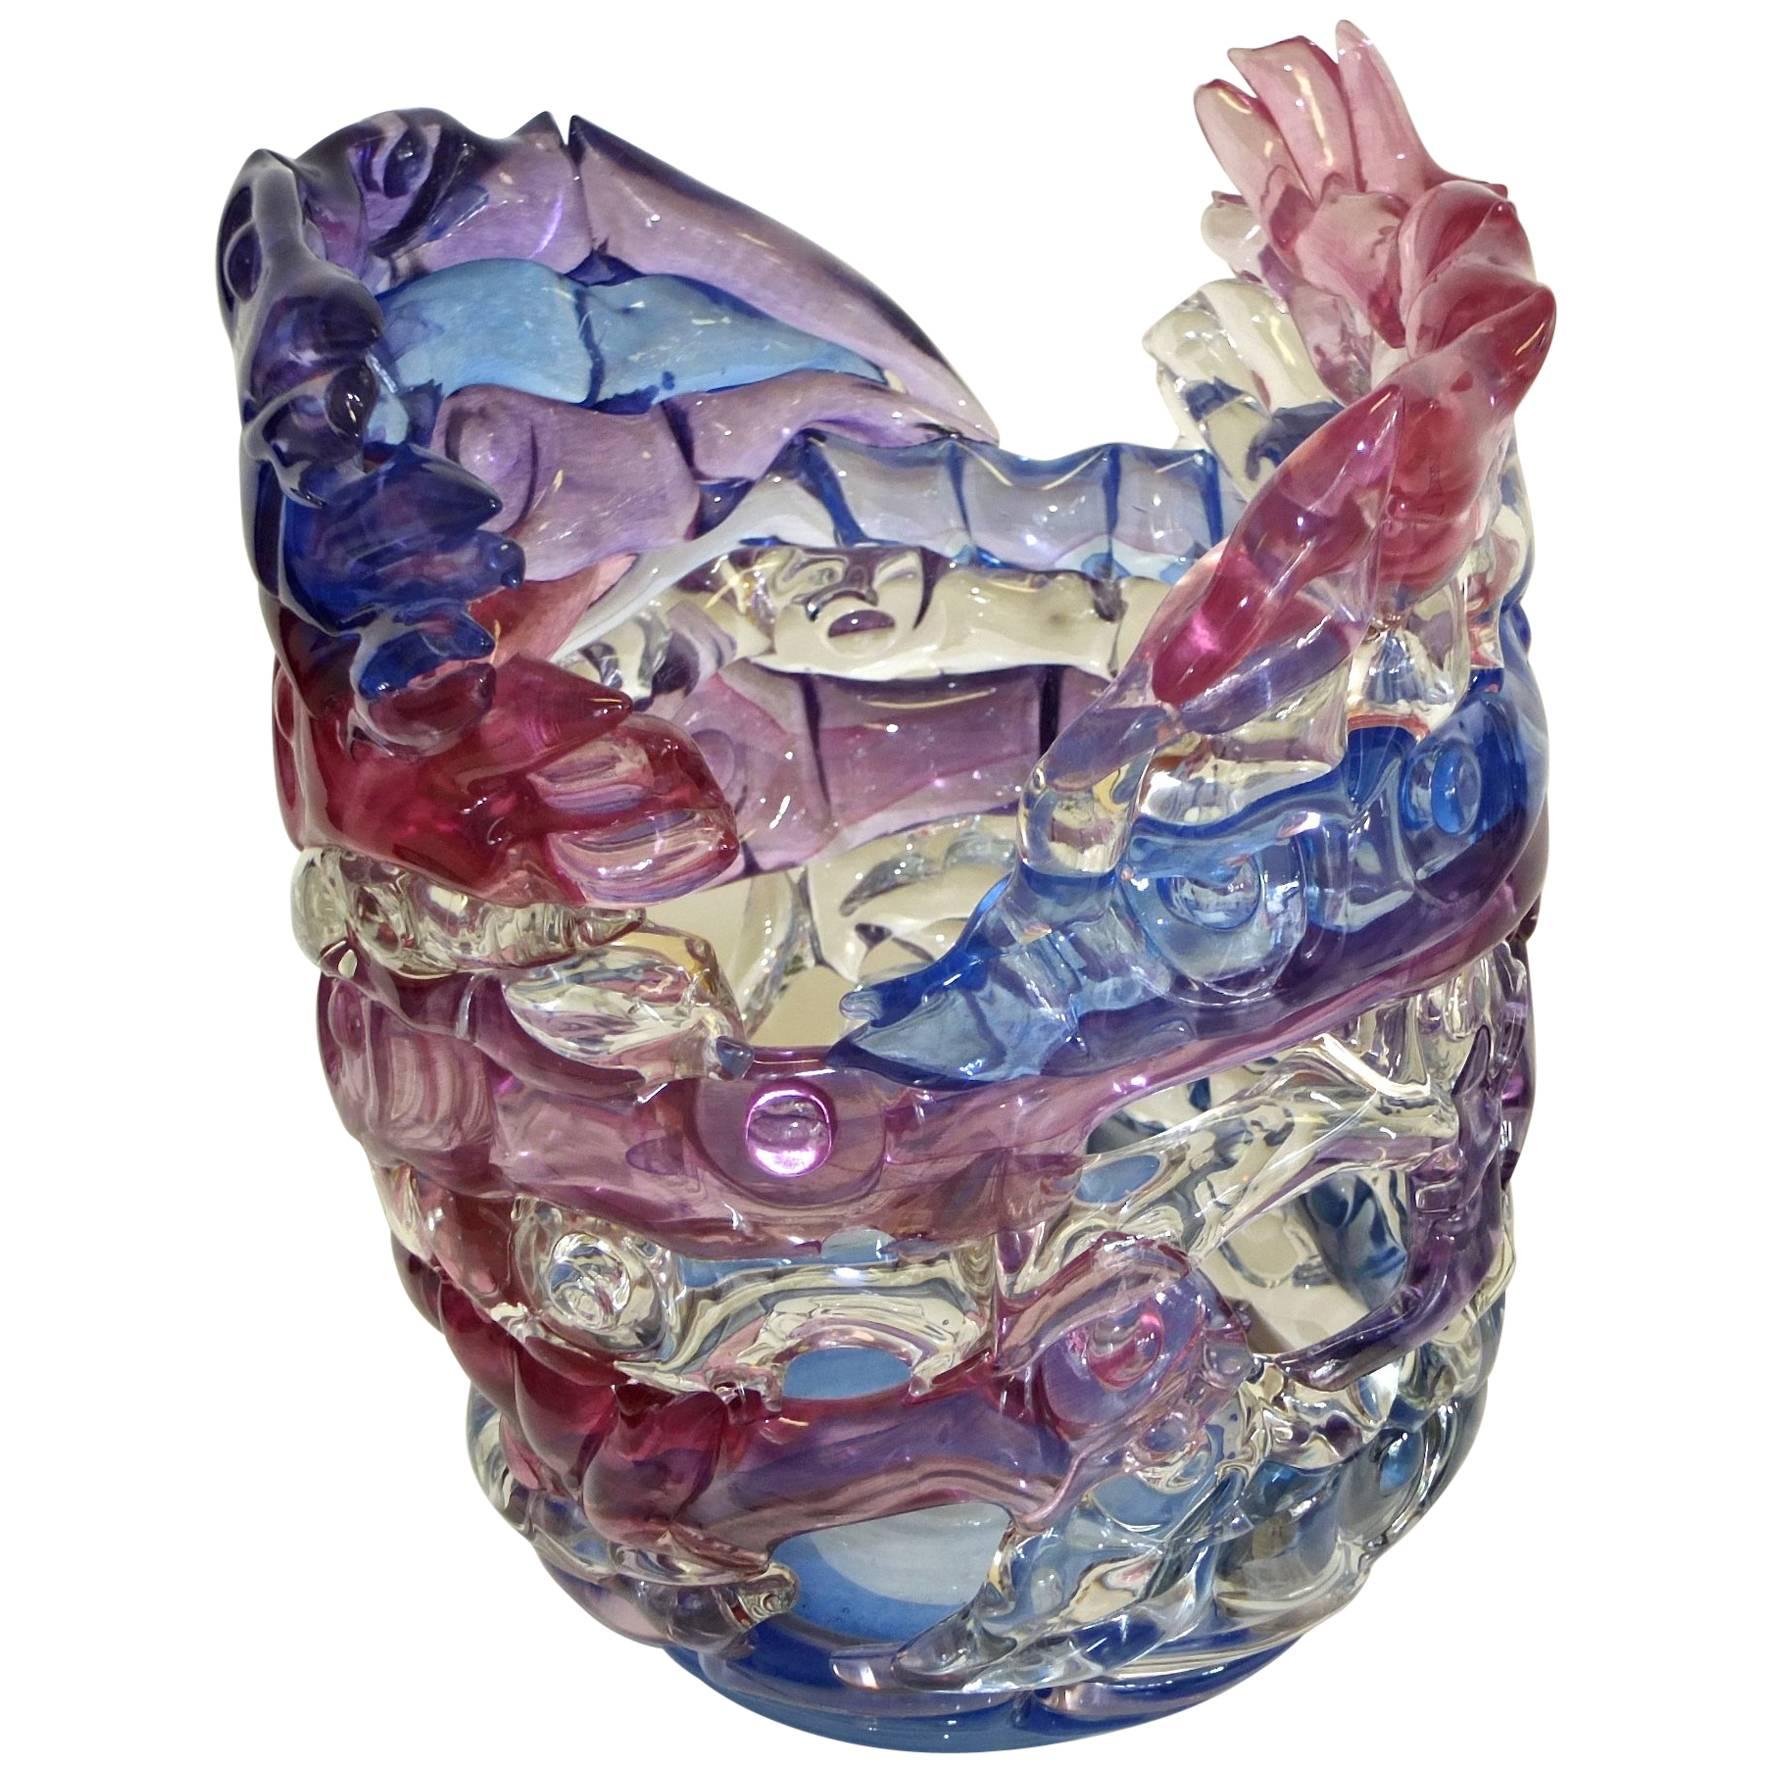 Tom Philabaum Art Glass Vase from "Handbuilt" Series, 1987